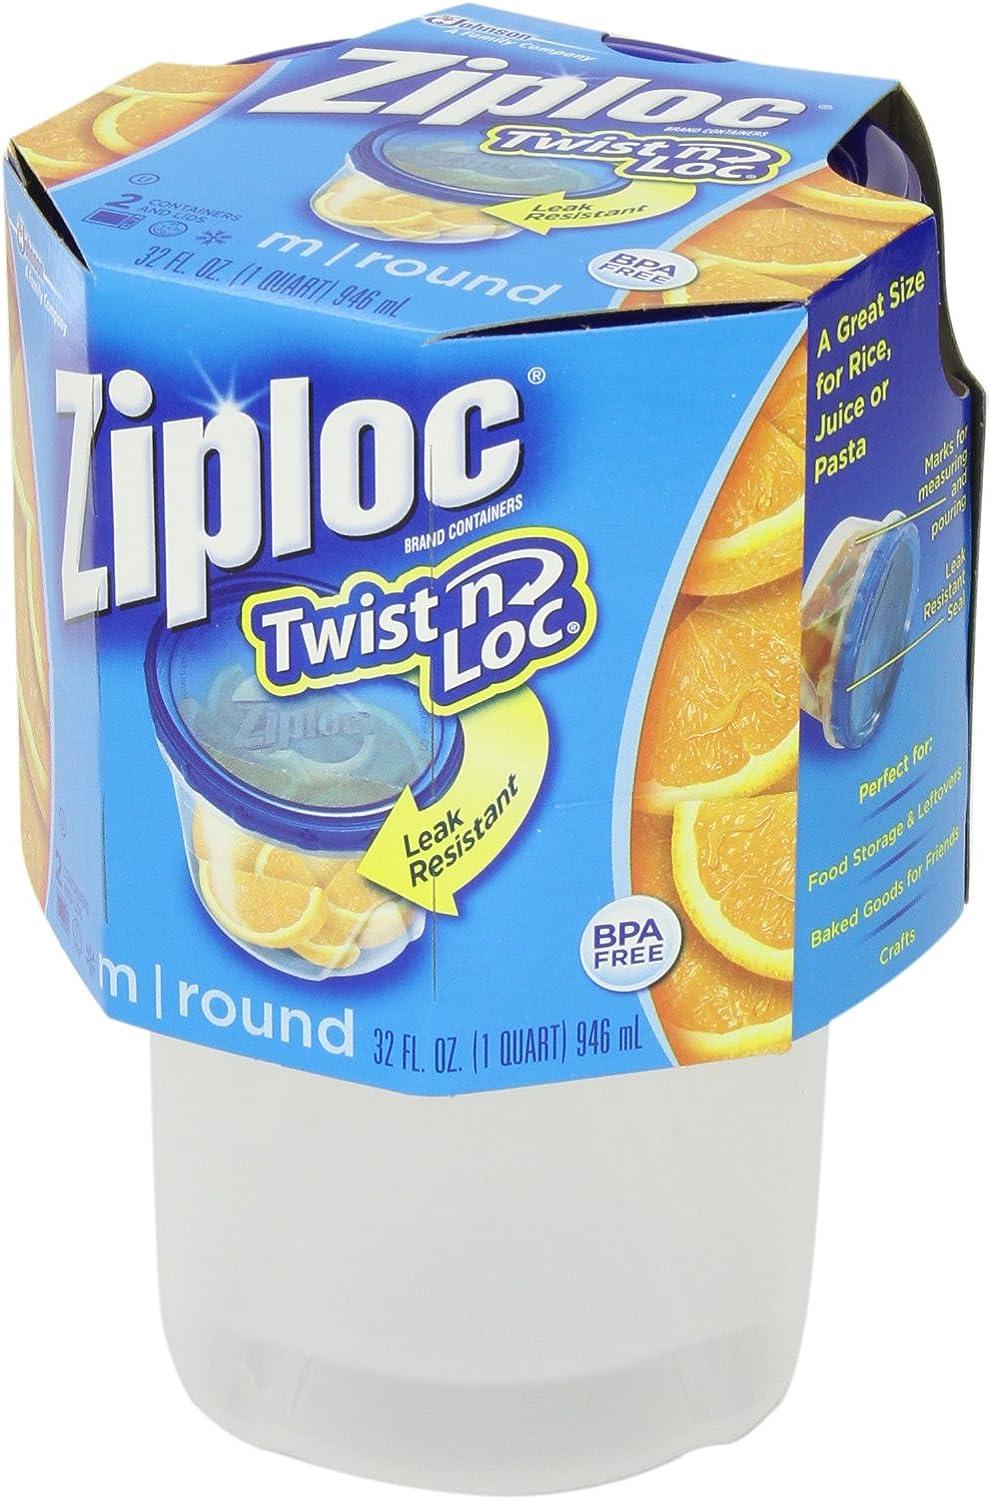 Ziploc Twist N Loc Food Storage Meal Prep Containers Review 